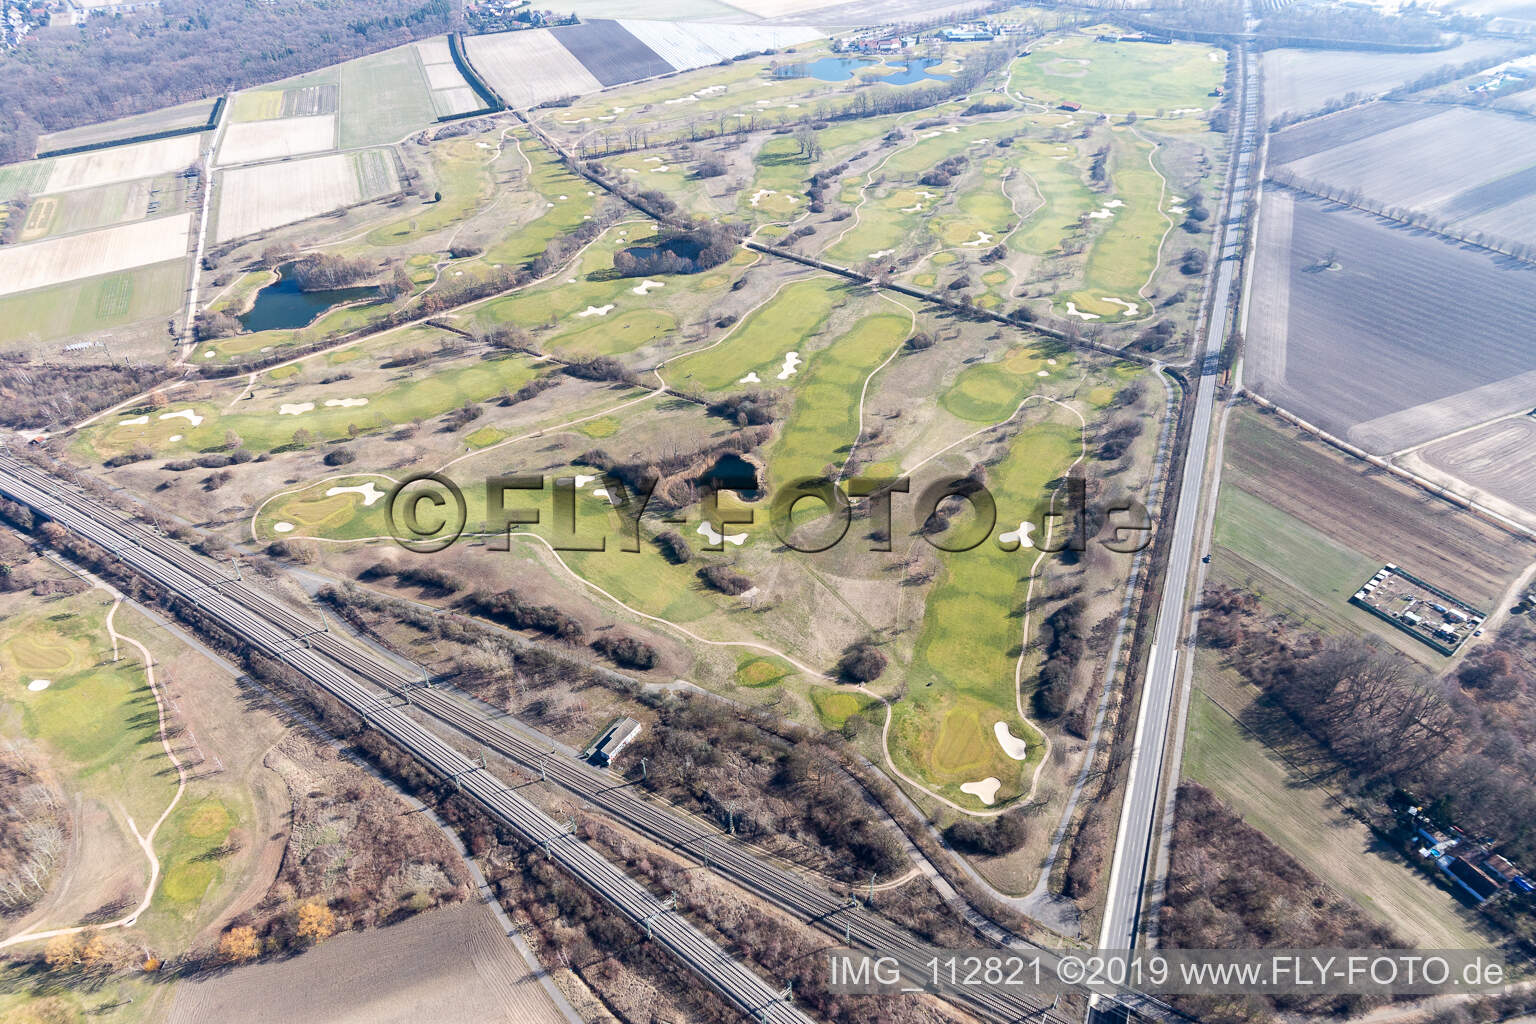 Grounds of the Golf course at Golfplatz Kurpfalz in Limburgerhof in the state Rhineland-Palatinate, Germany